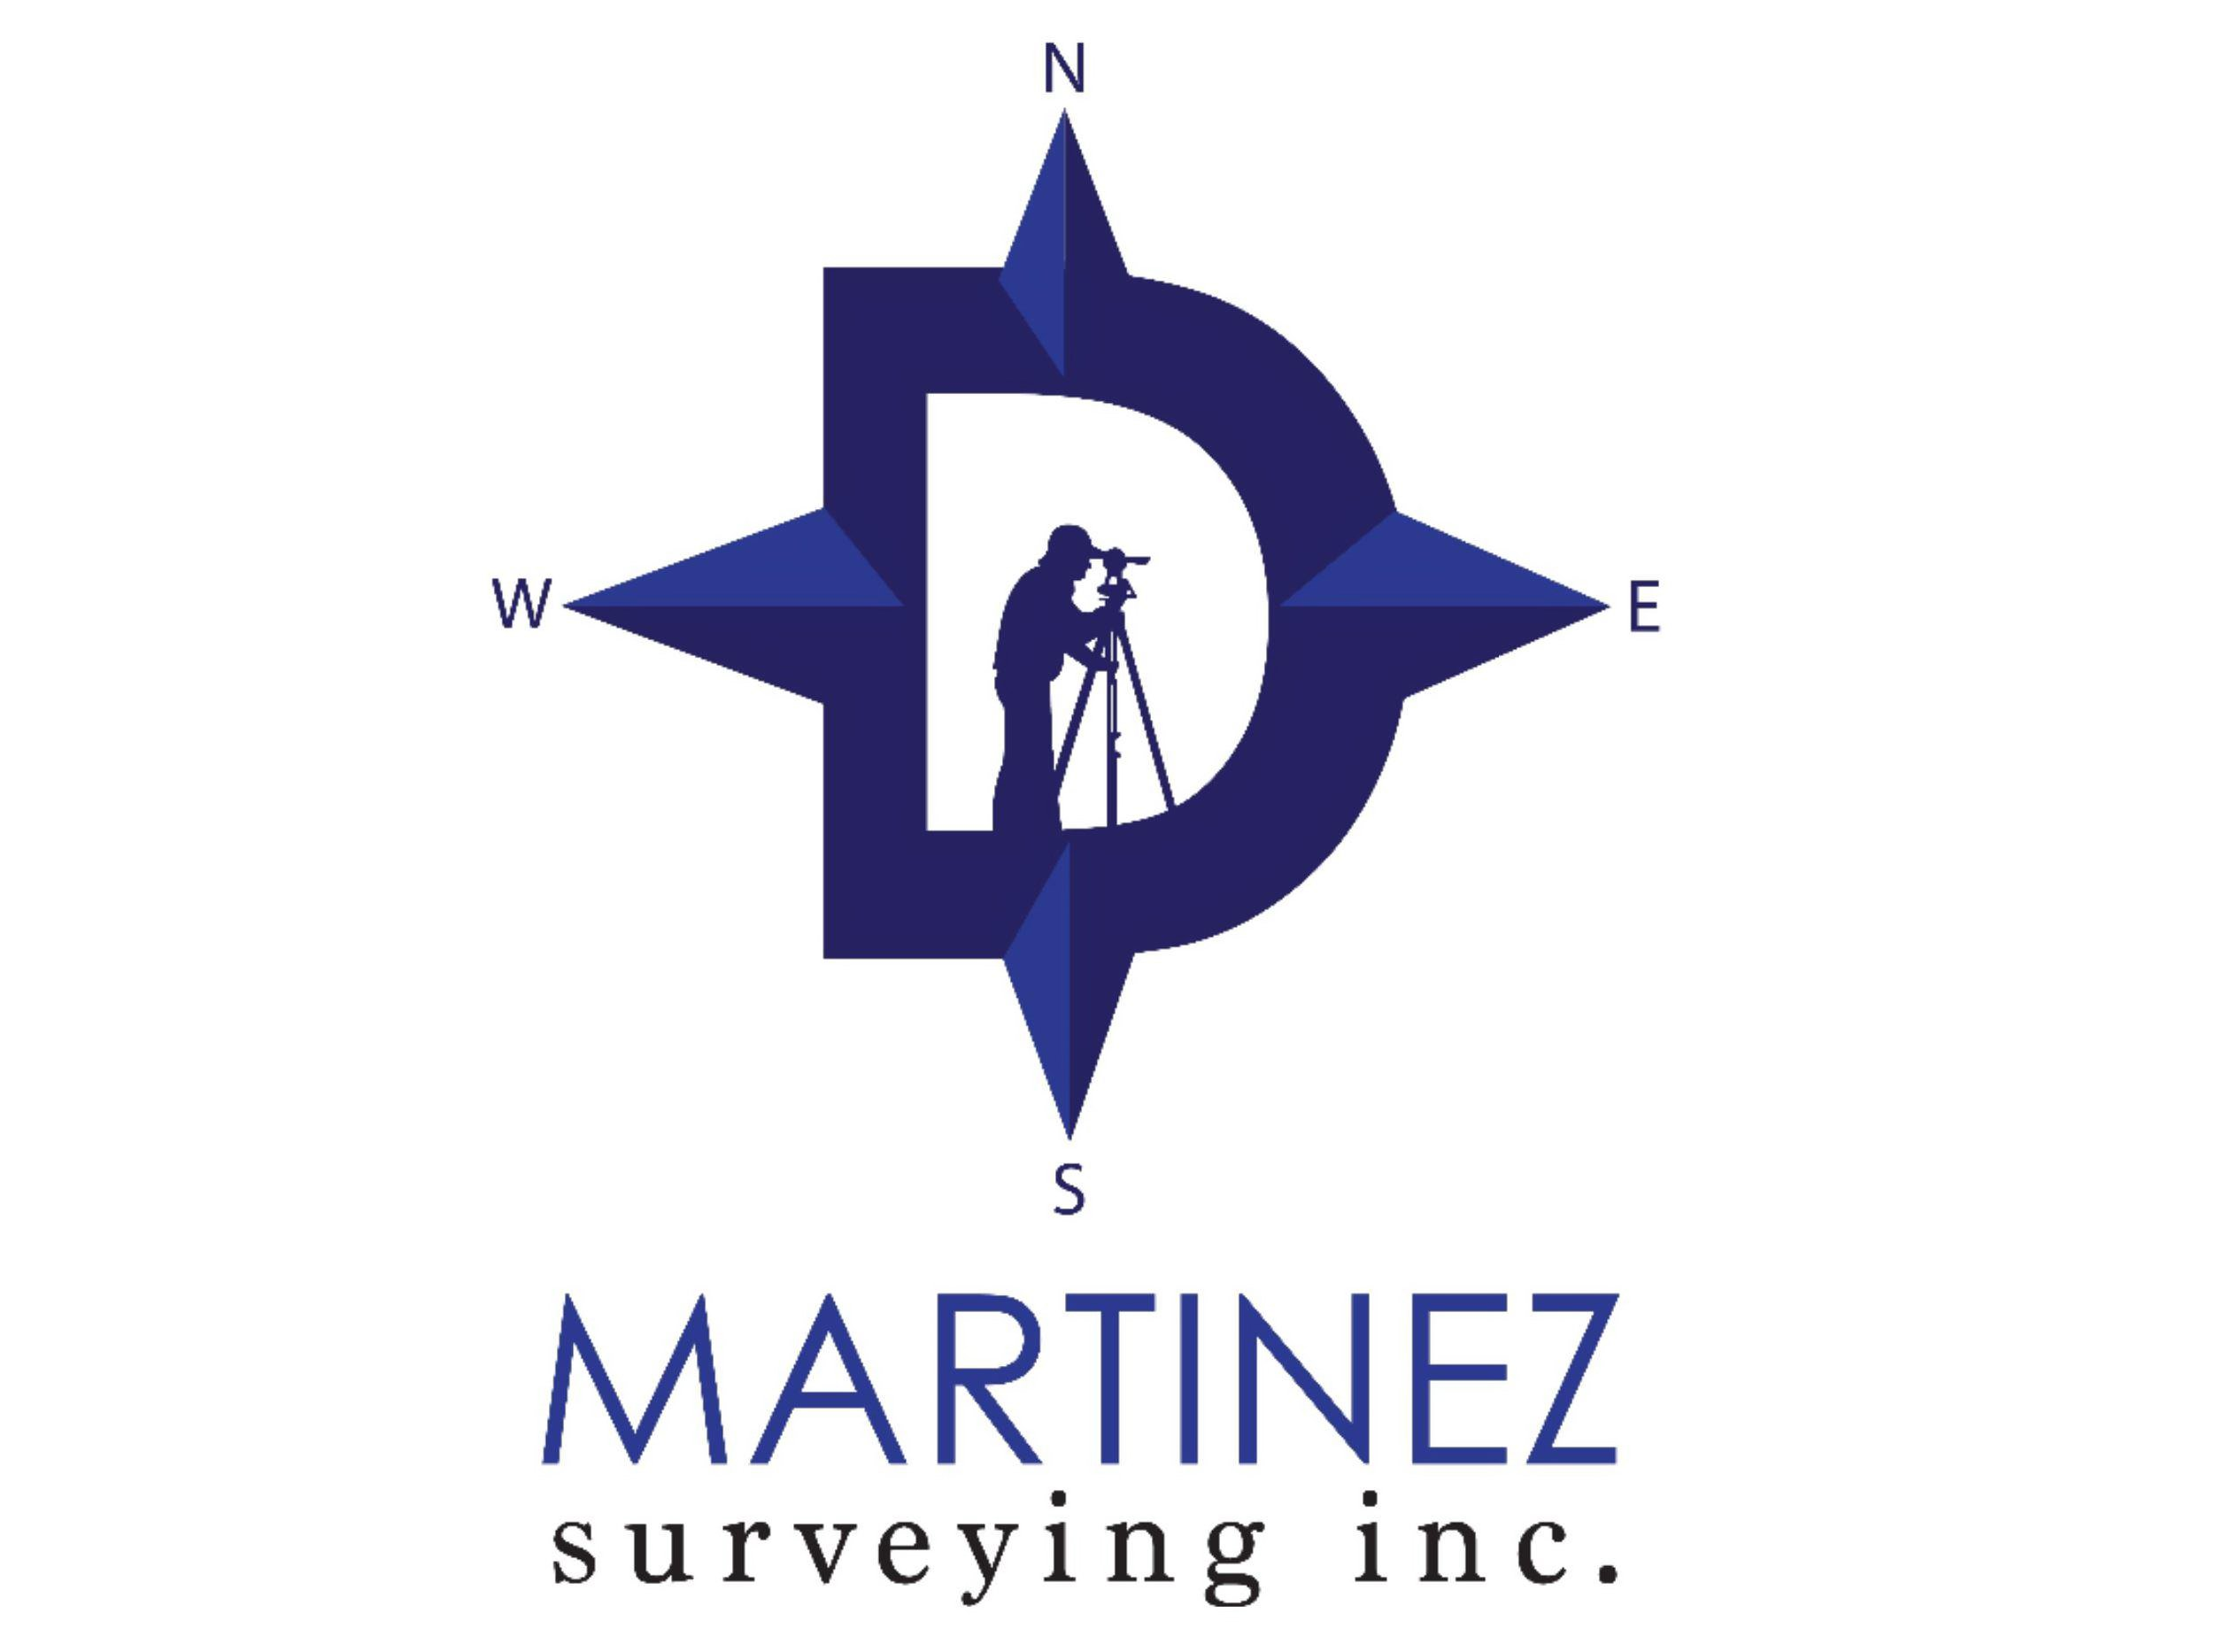  D. MARTINEZ SURVEYING INC.